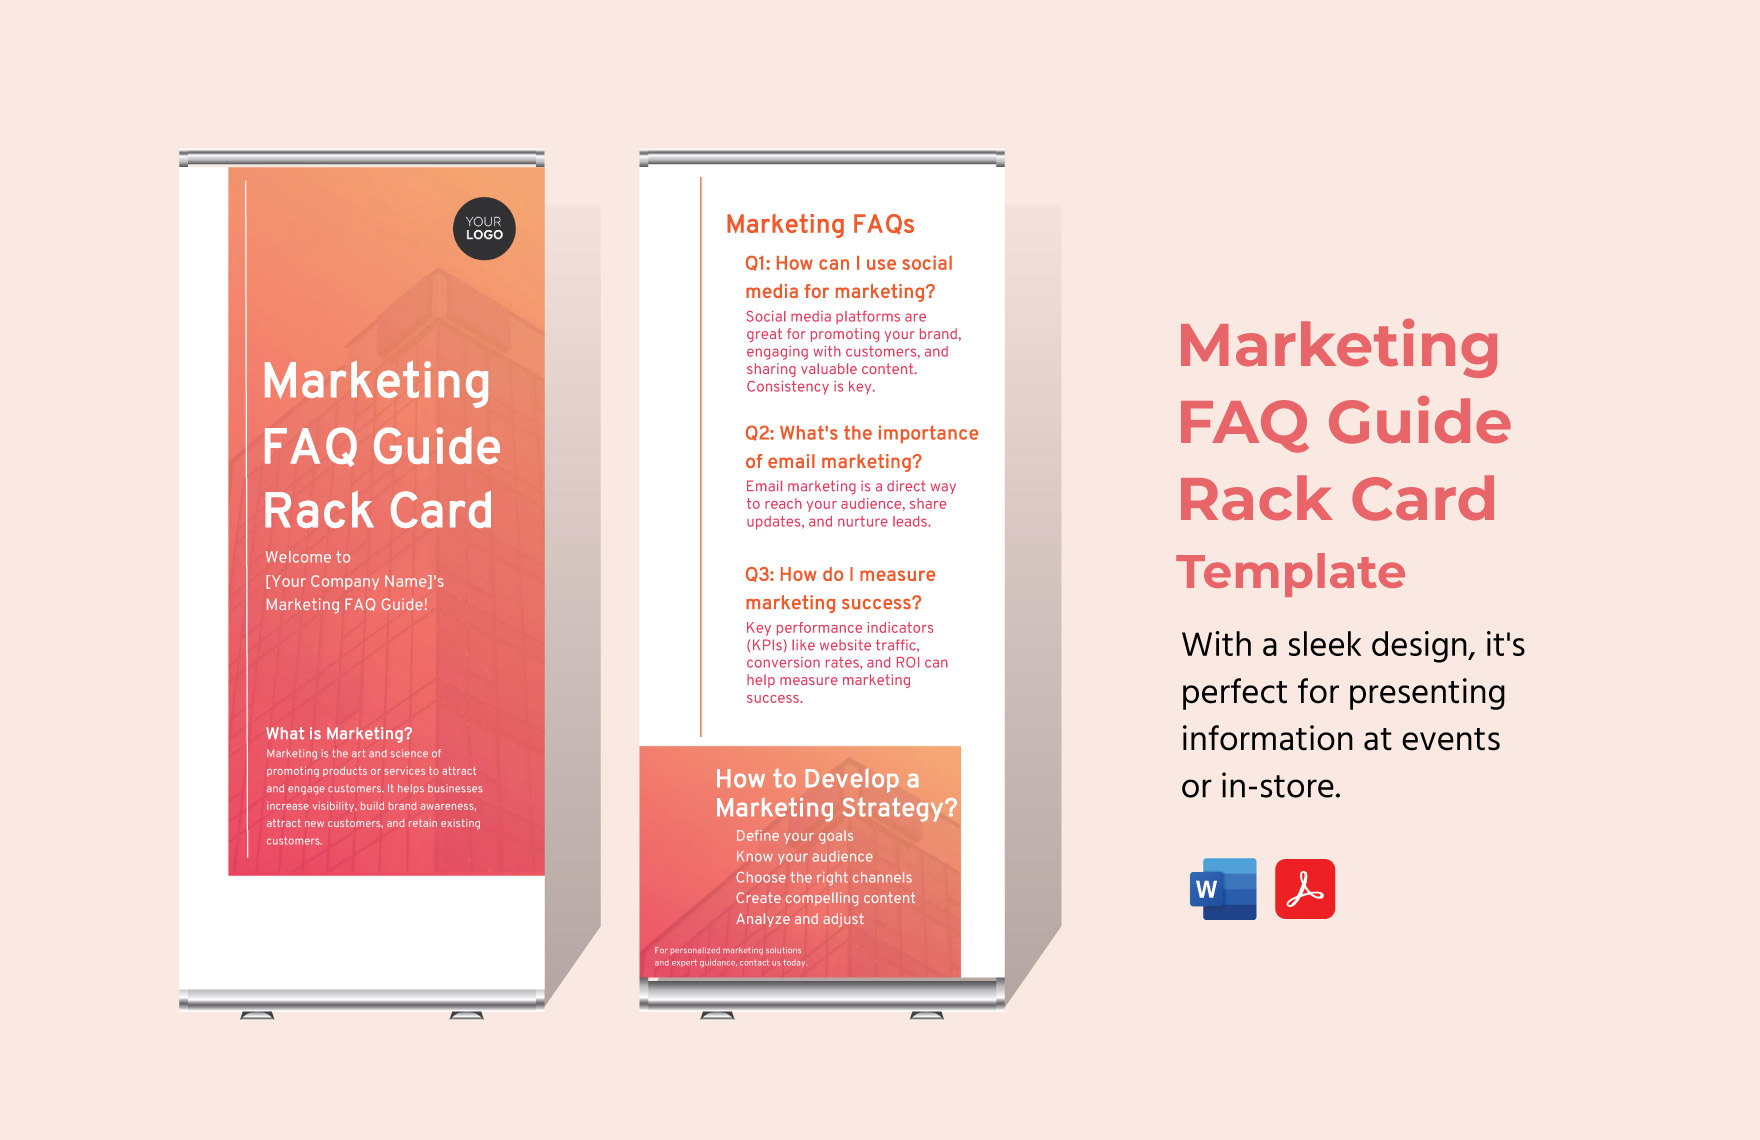 Marketing FAQ Guide Rack Card Template